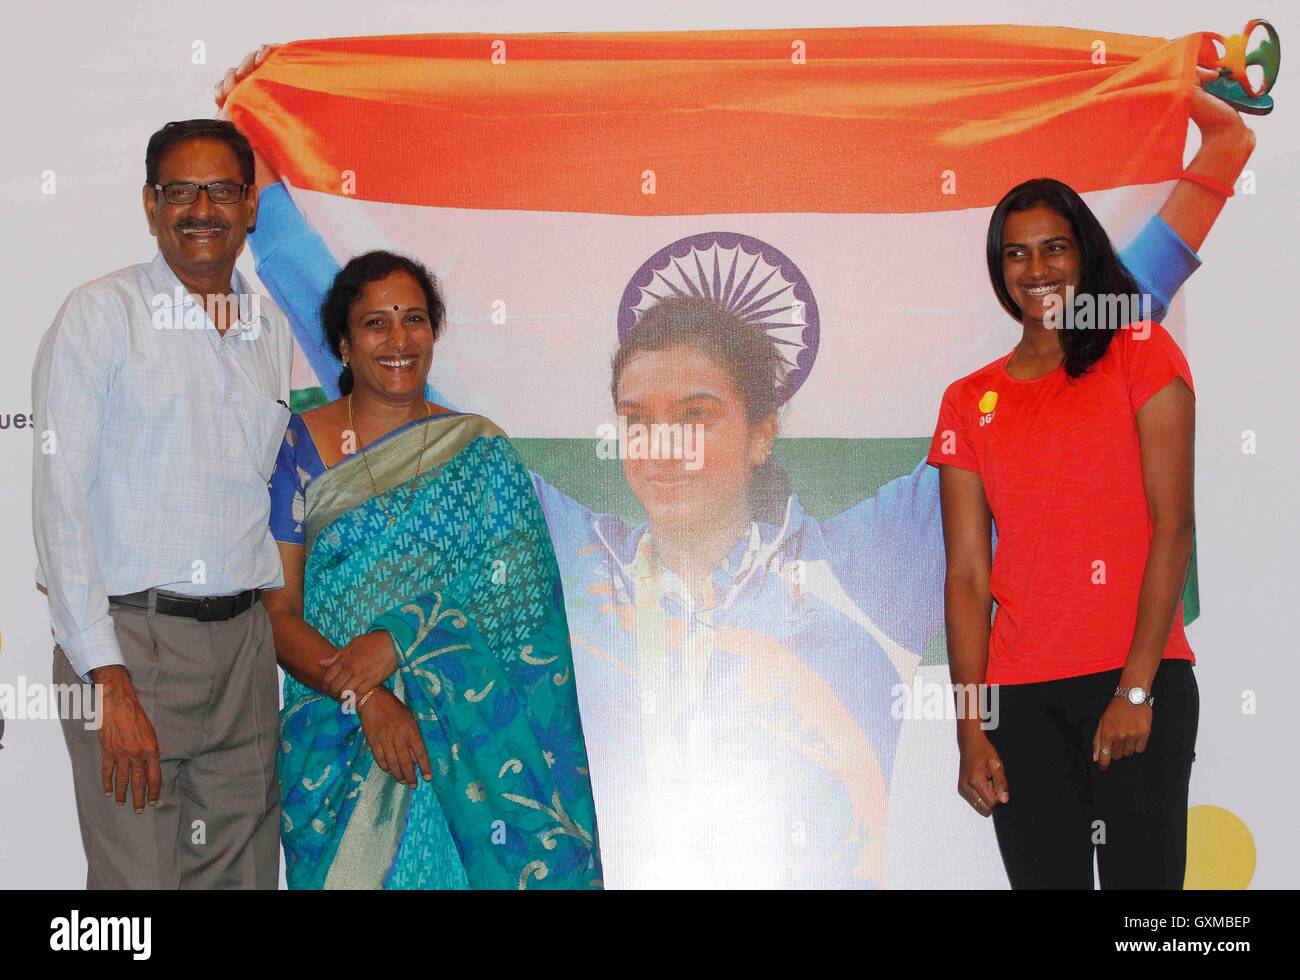 Indischer Badmintonspieler Silbermedaillengewinnerin P V Sindhu Eltern PV Ramana P Vijaya felicitation Funktion organisiert OGQ Bombay Mumbai Maharashtra Indien Asien Indischer Asian Stockfoto